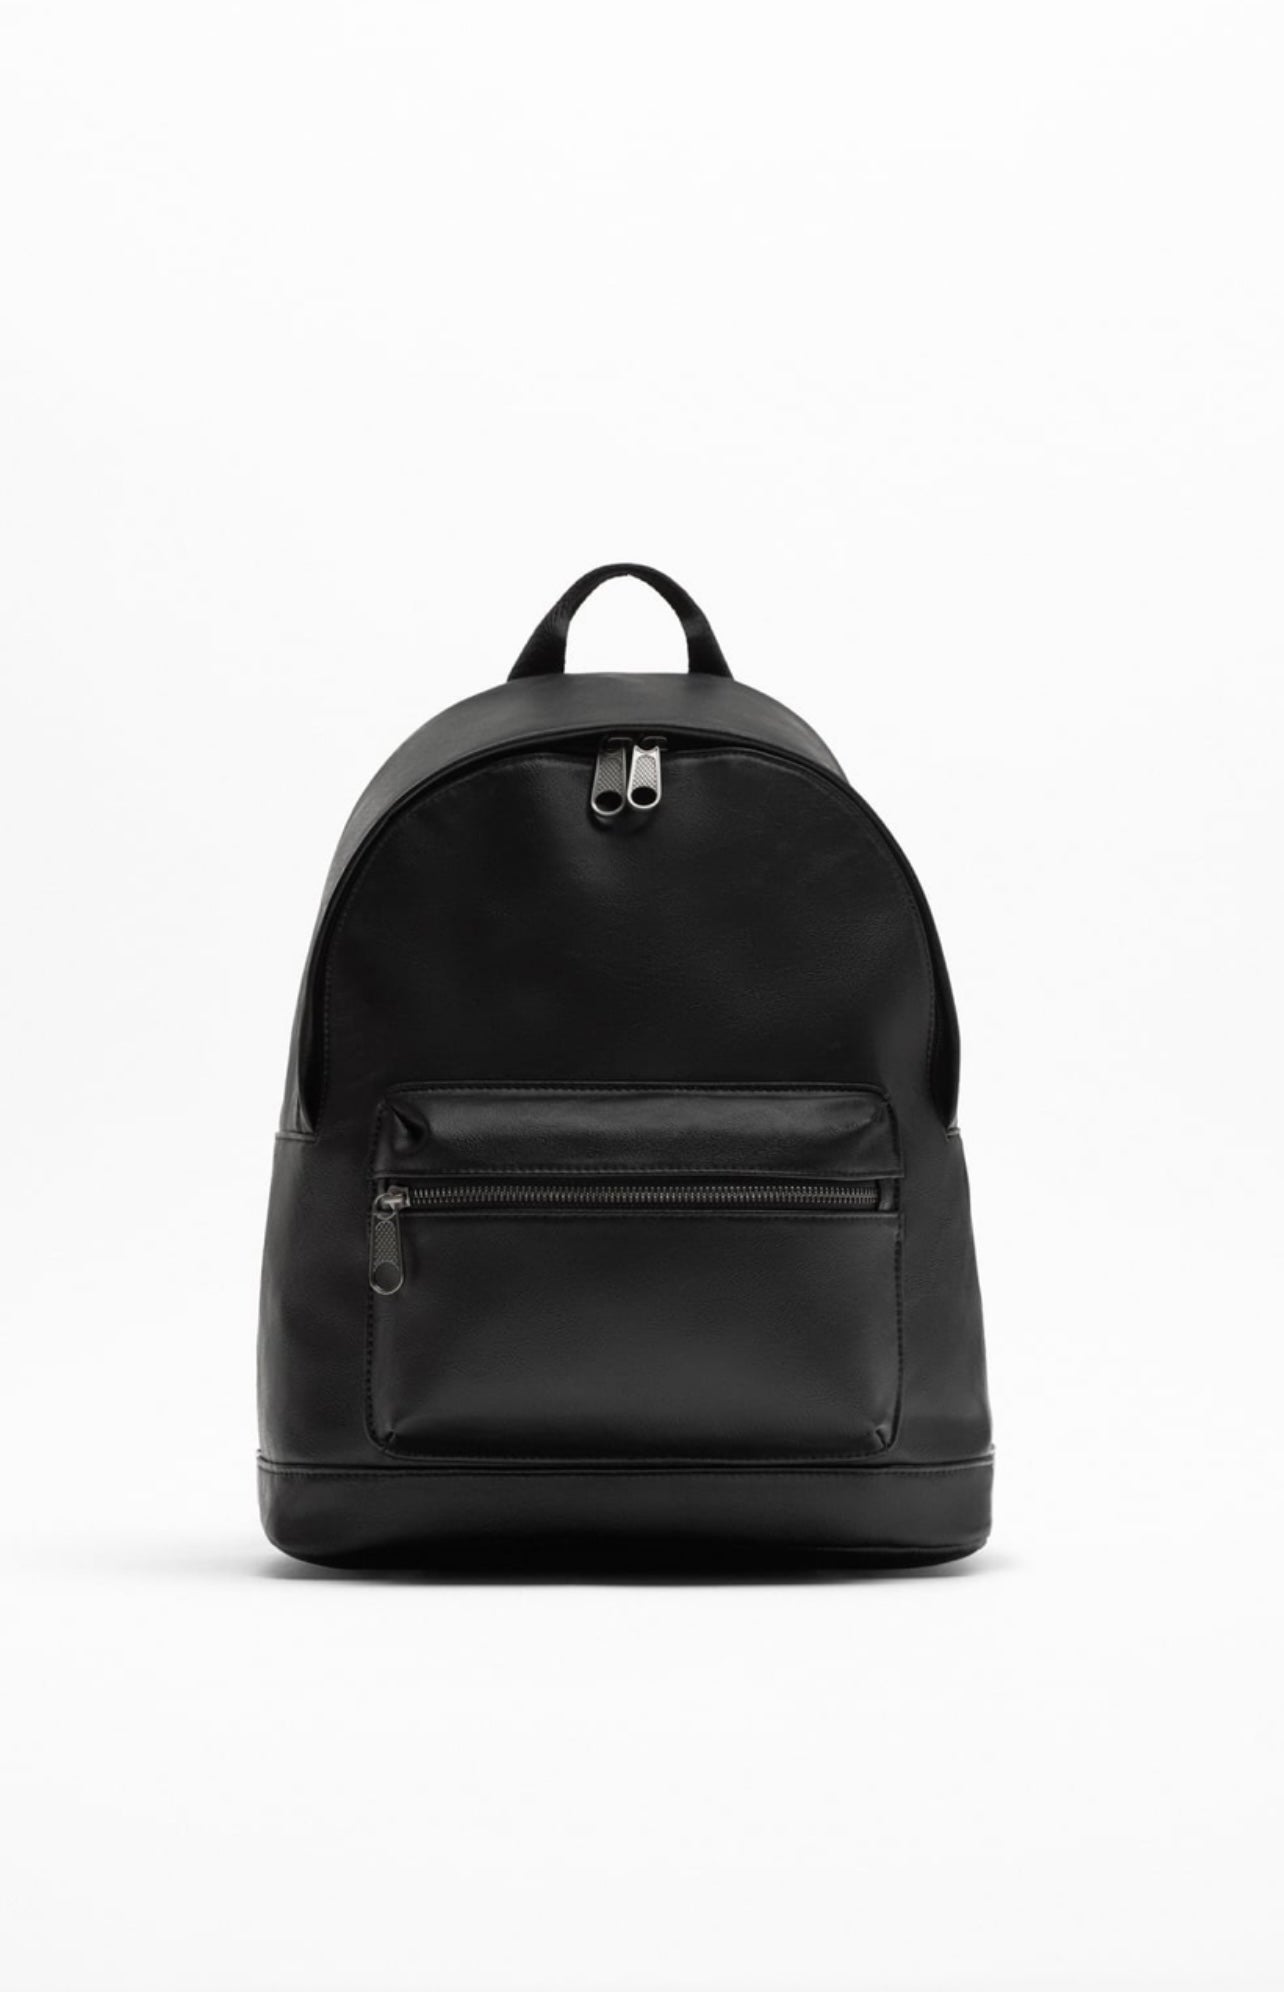 Zara Contrast Backpack Bag